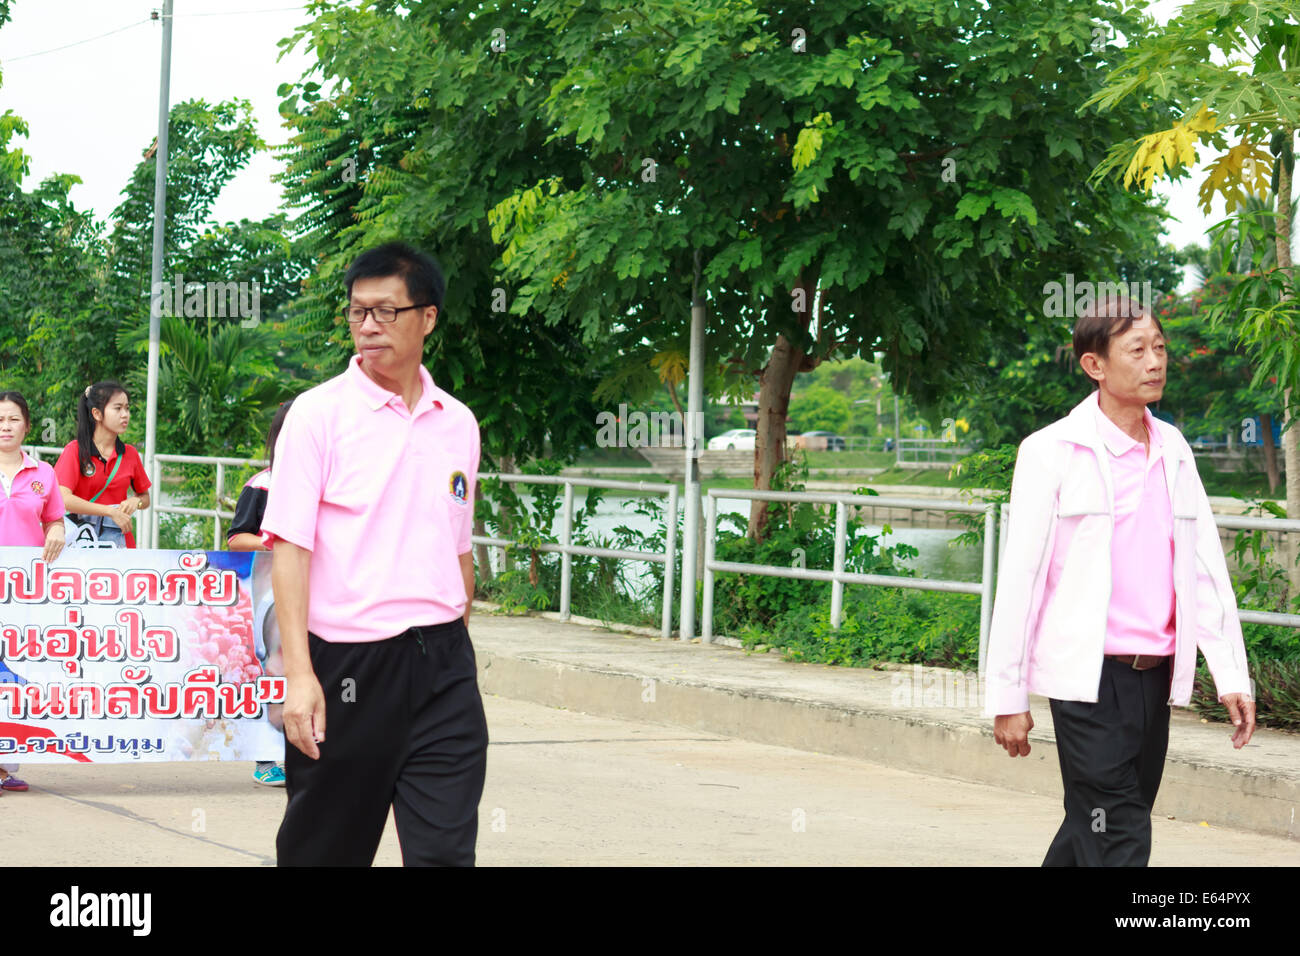 MAHASARAKHAM,THAILANDS – JUNE 26 : Parades of organizing sports tournaments on june 26, in Mahasarakham,Thailand Stock Photo